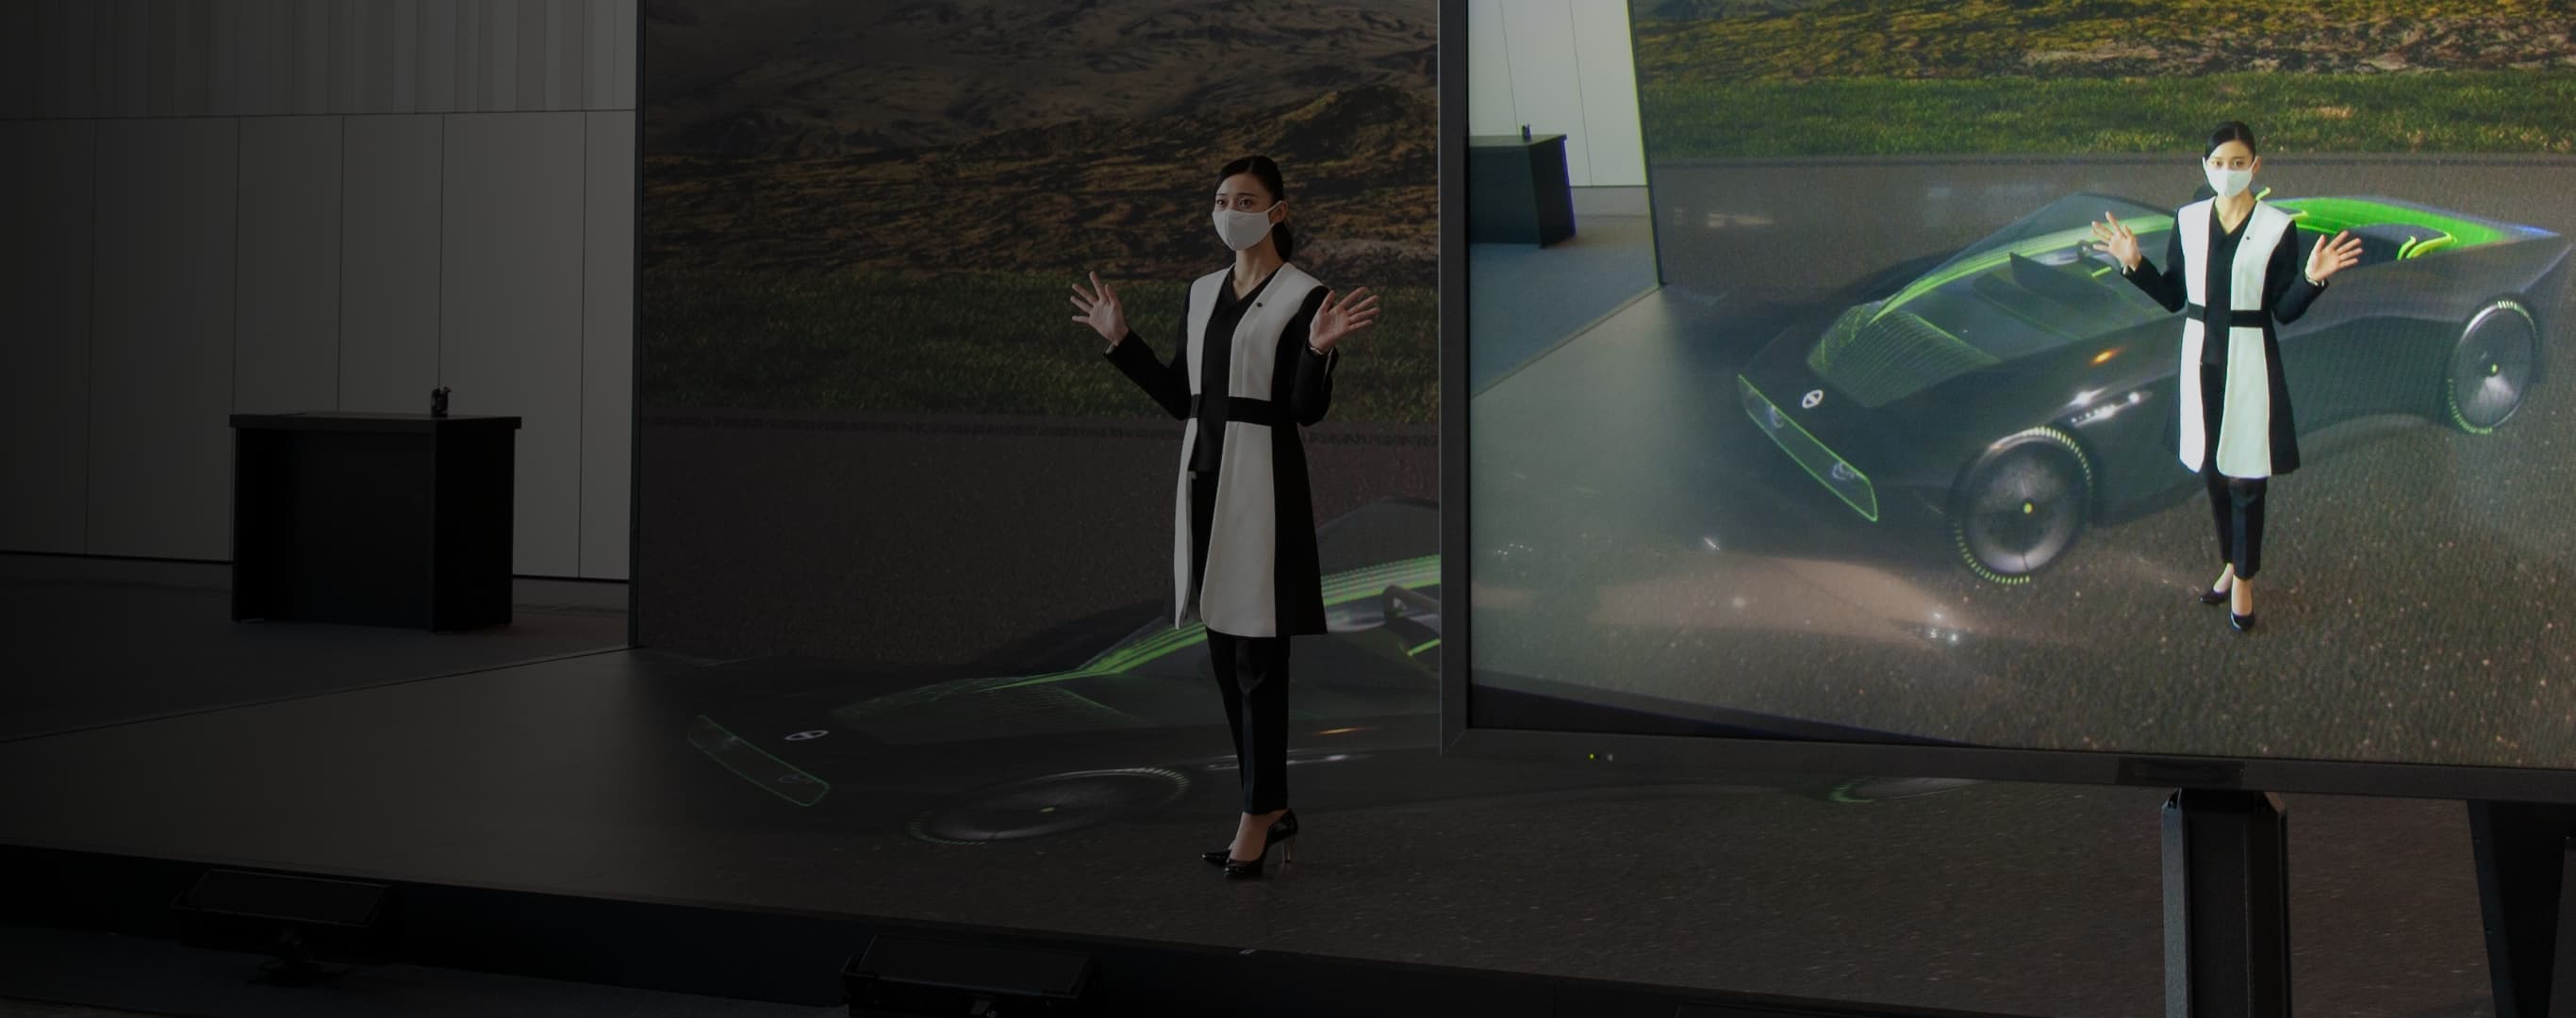 Concept Car Virtual Stage